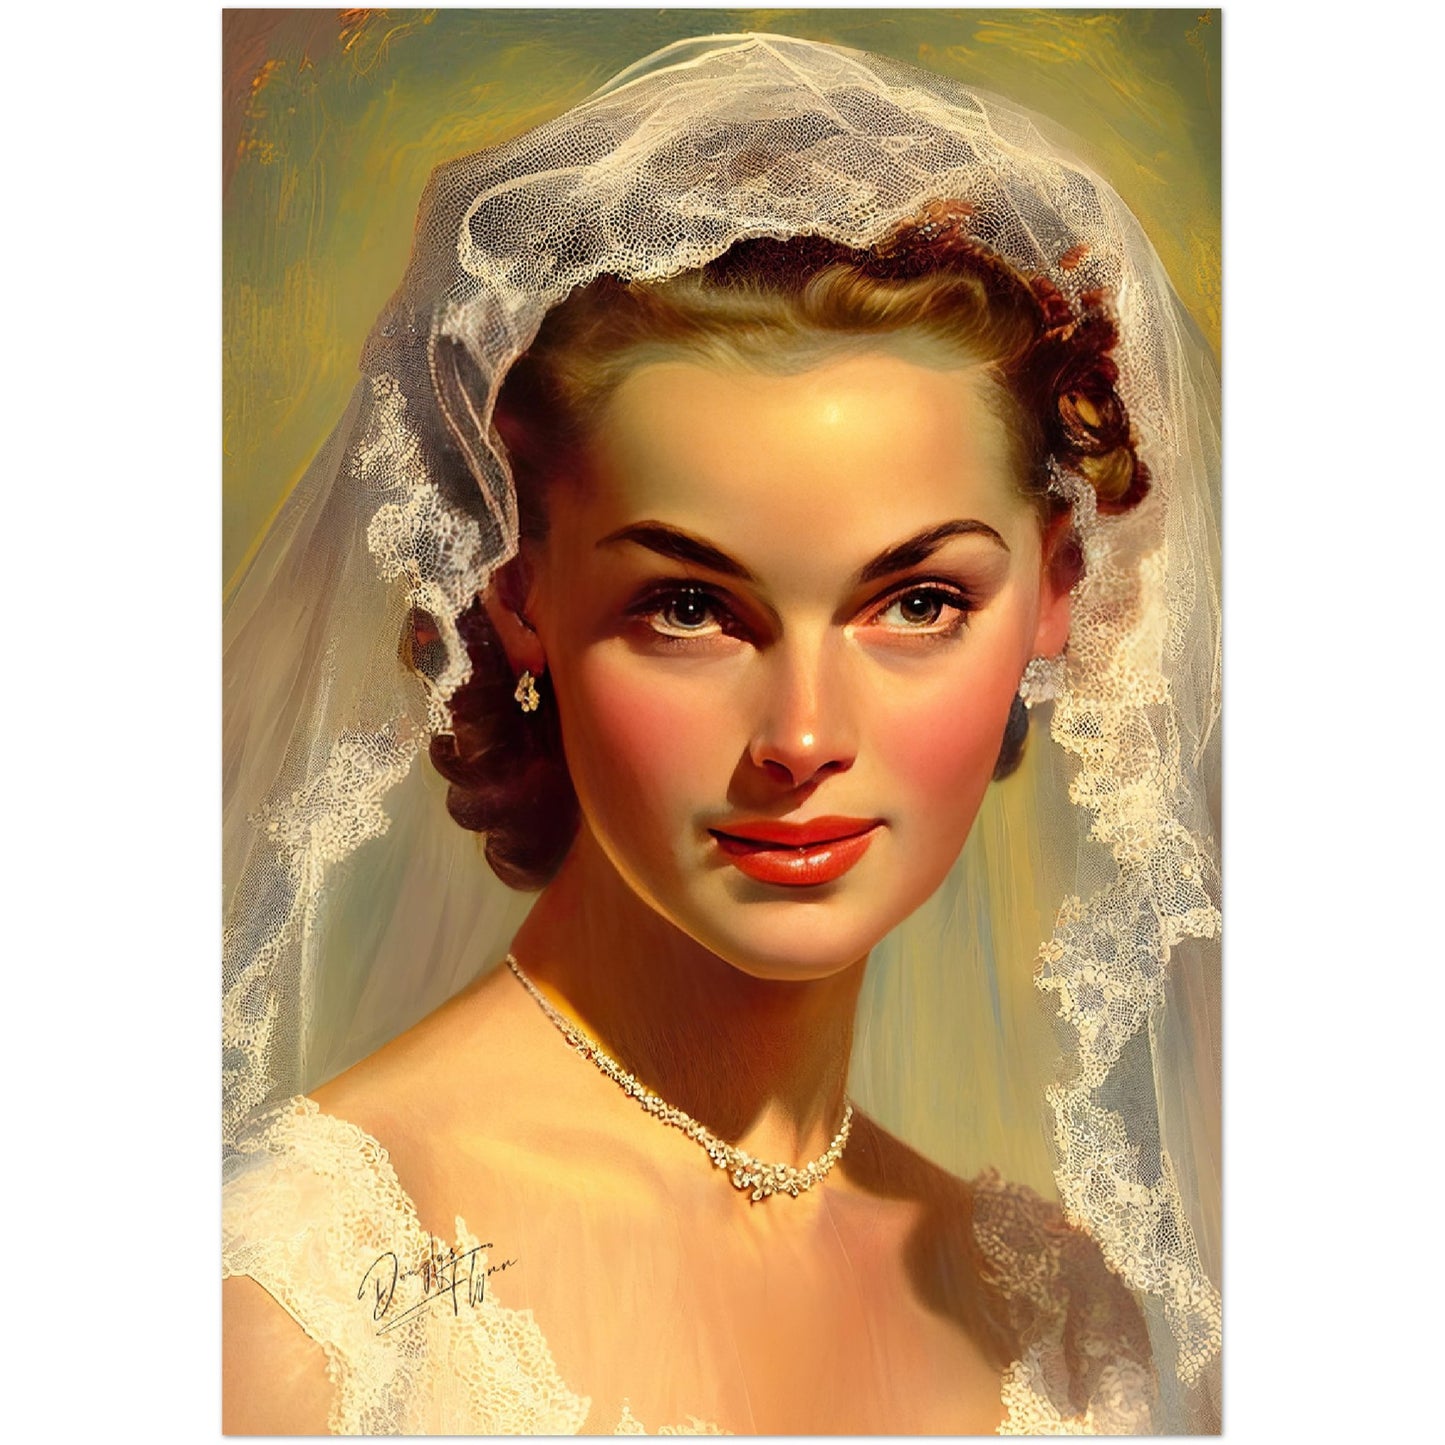 »Wedding Memories« retro poster